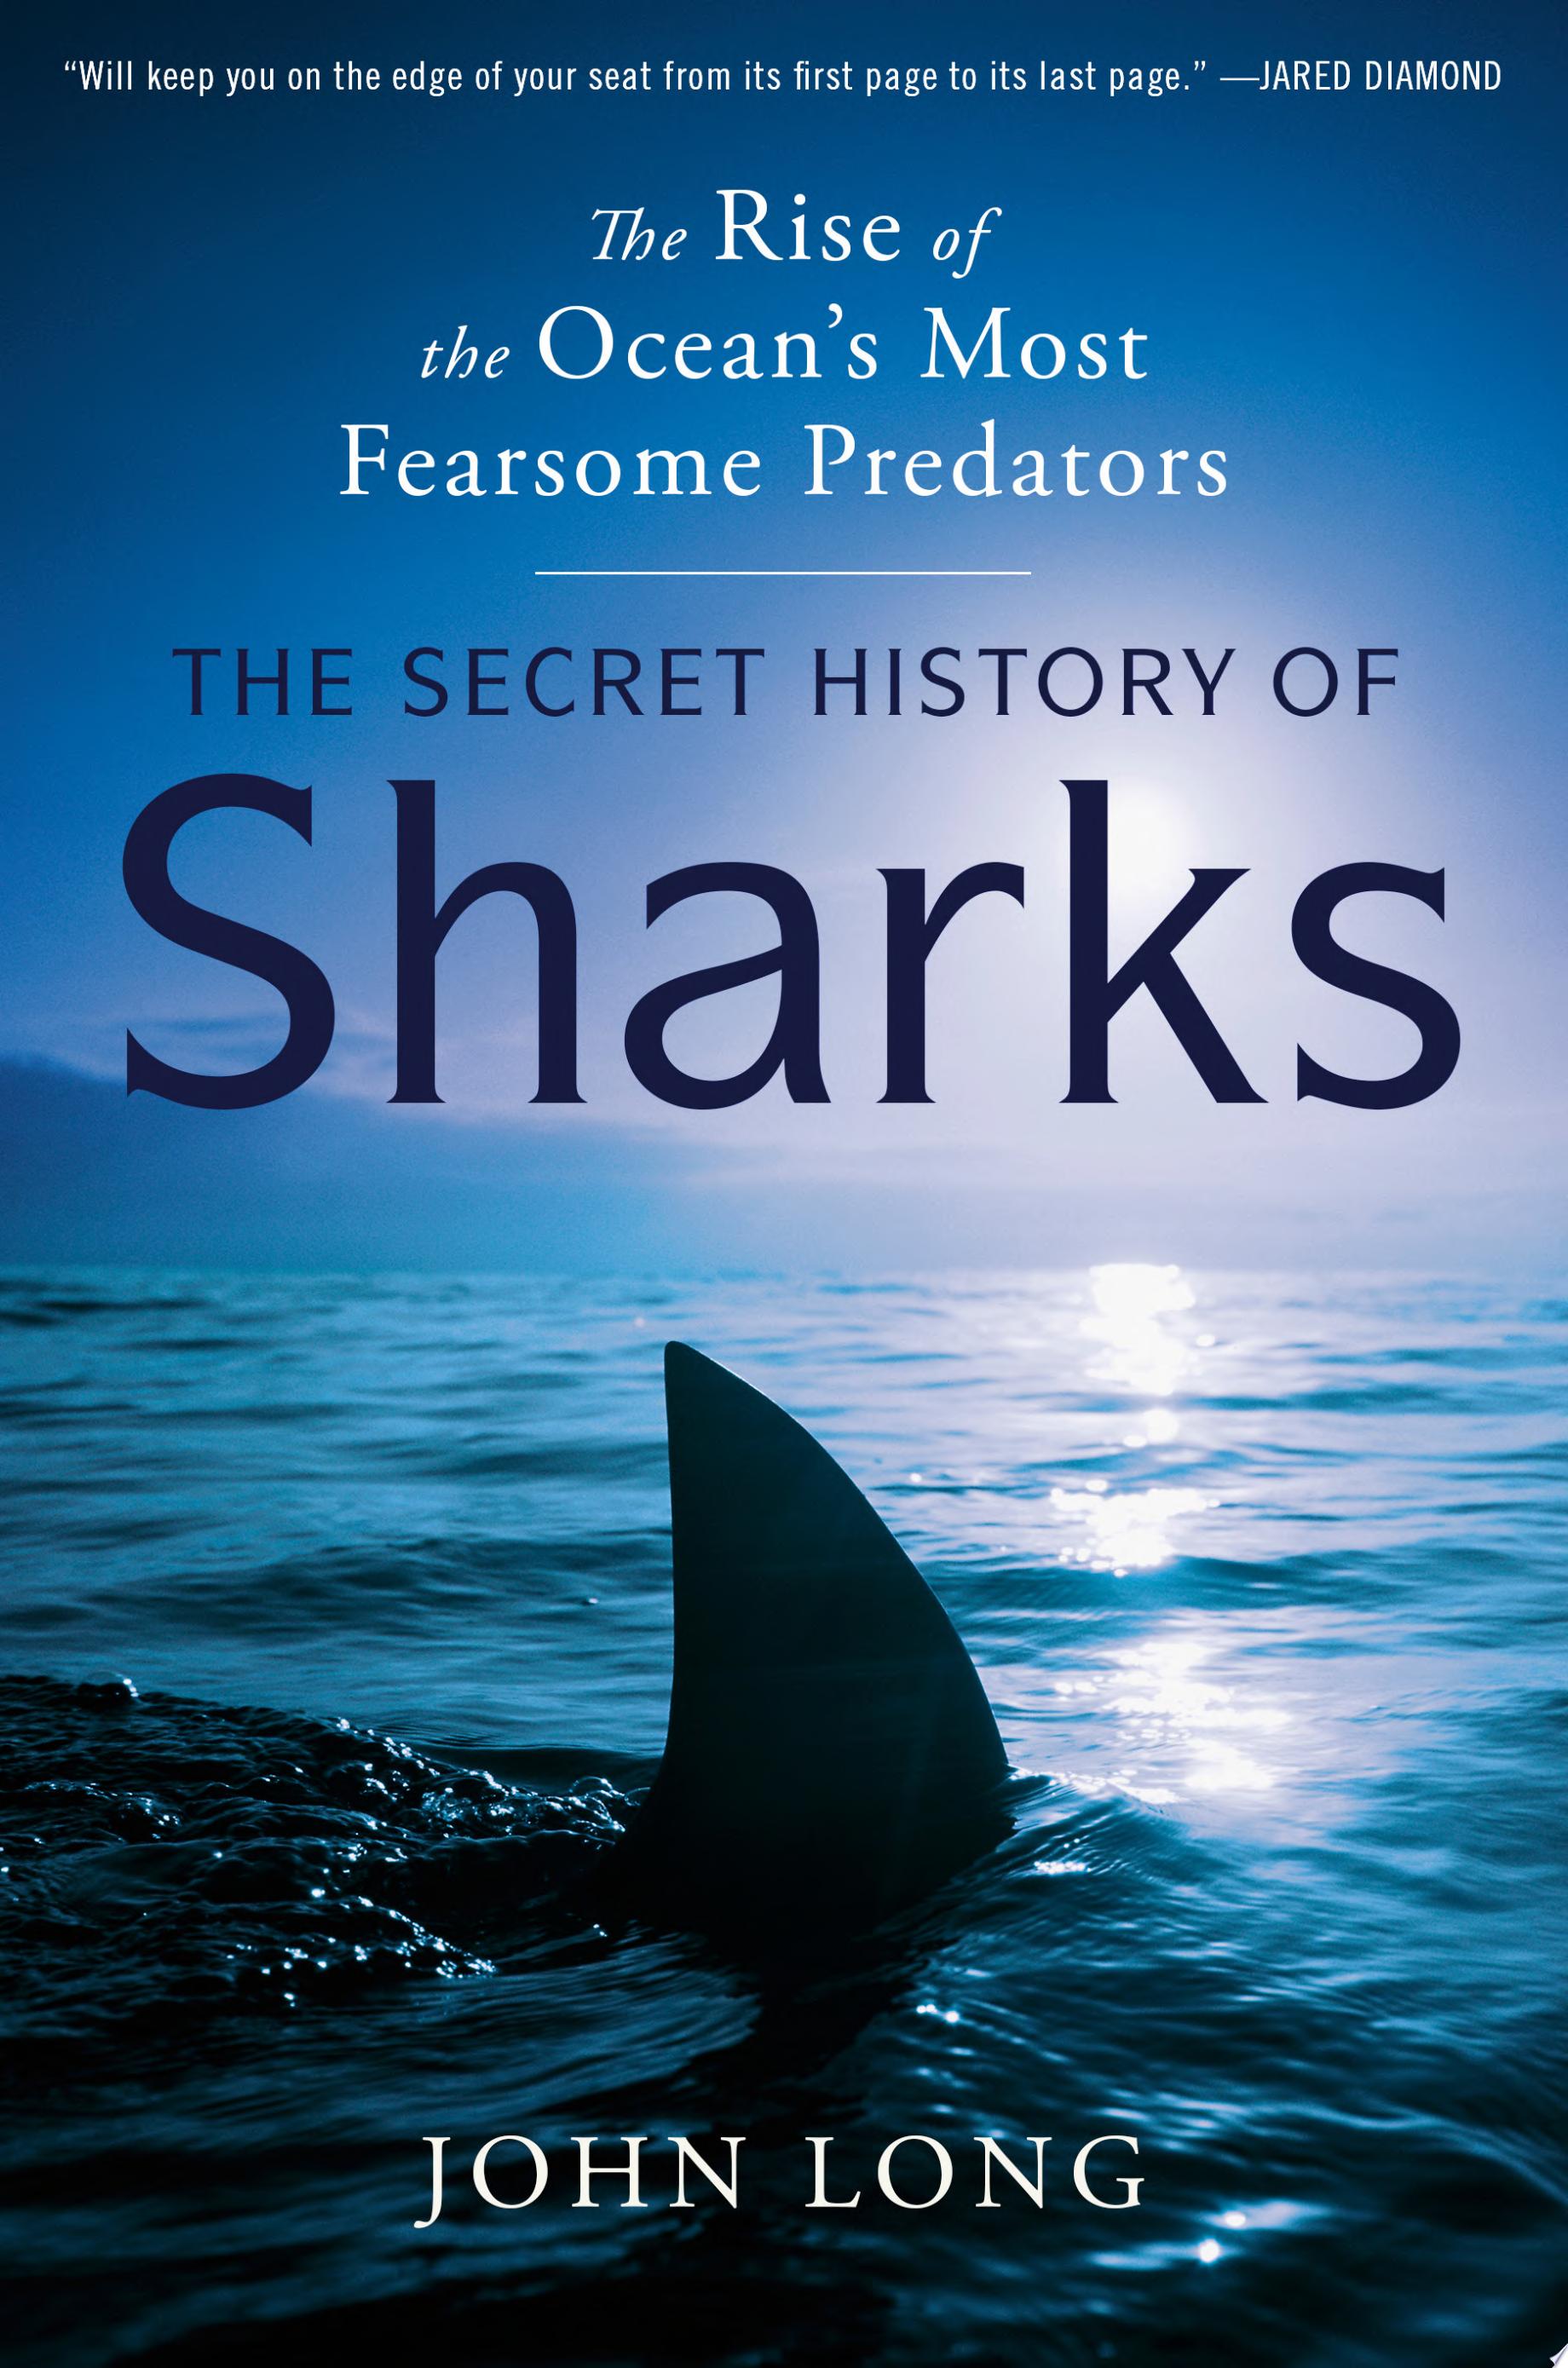 Image for "The Secret History of Sharks"